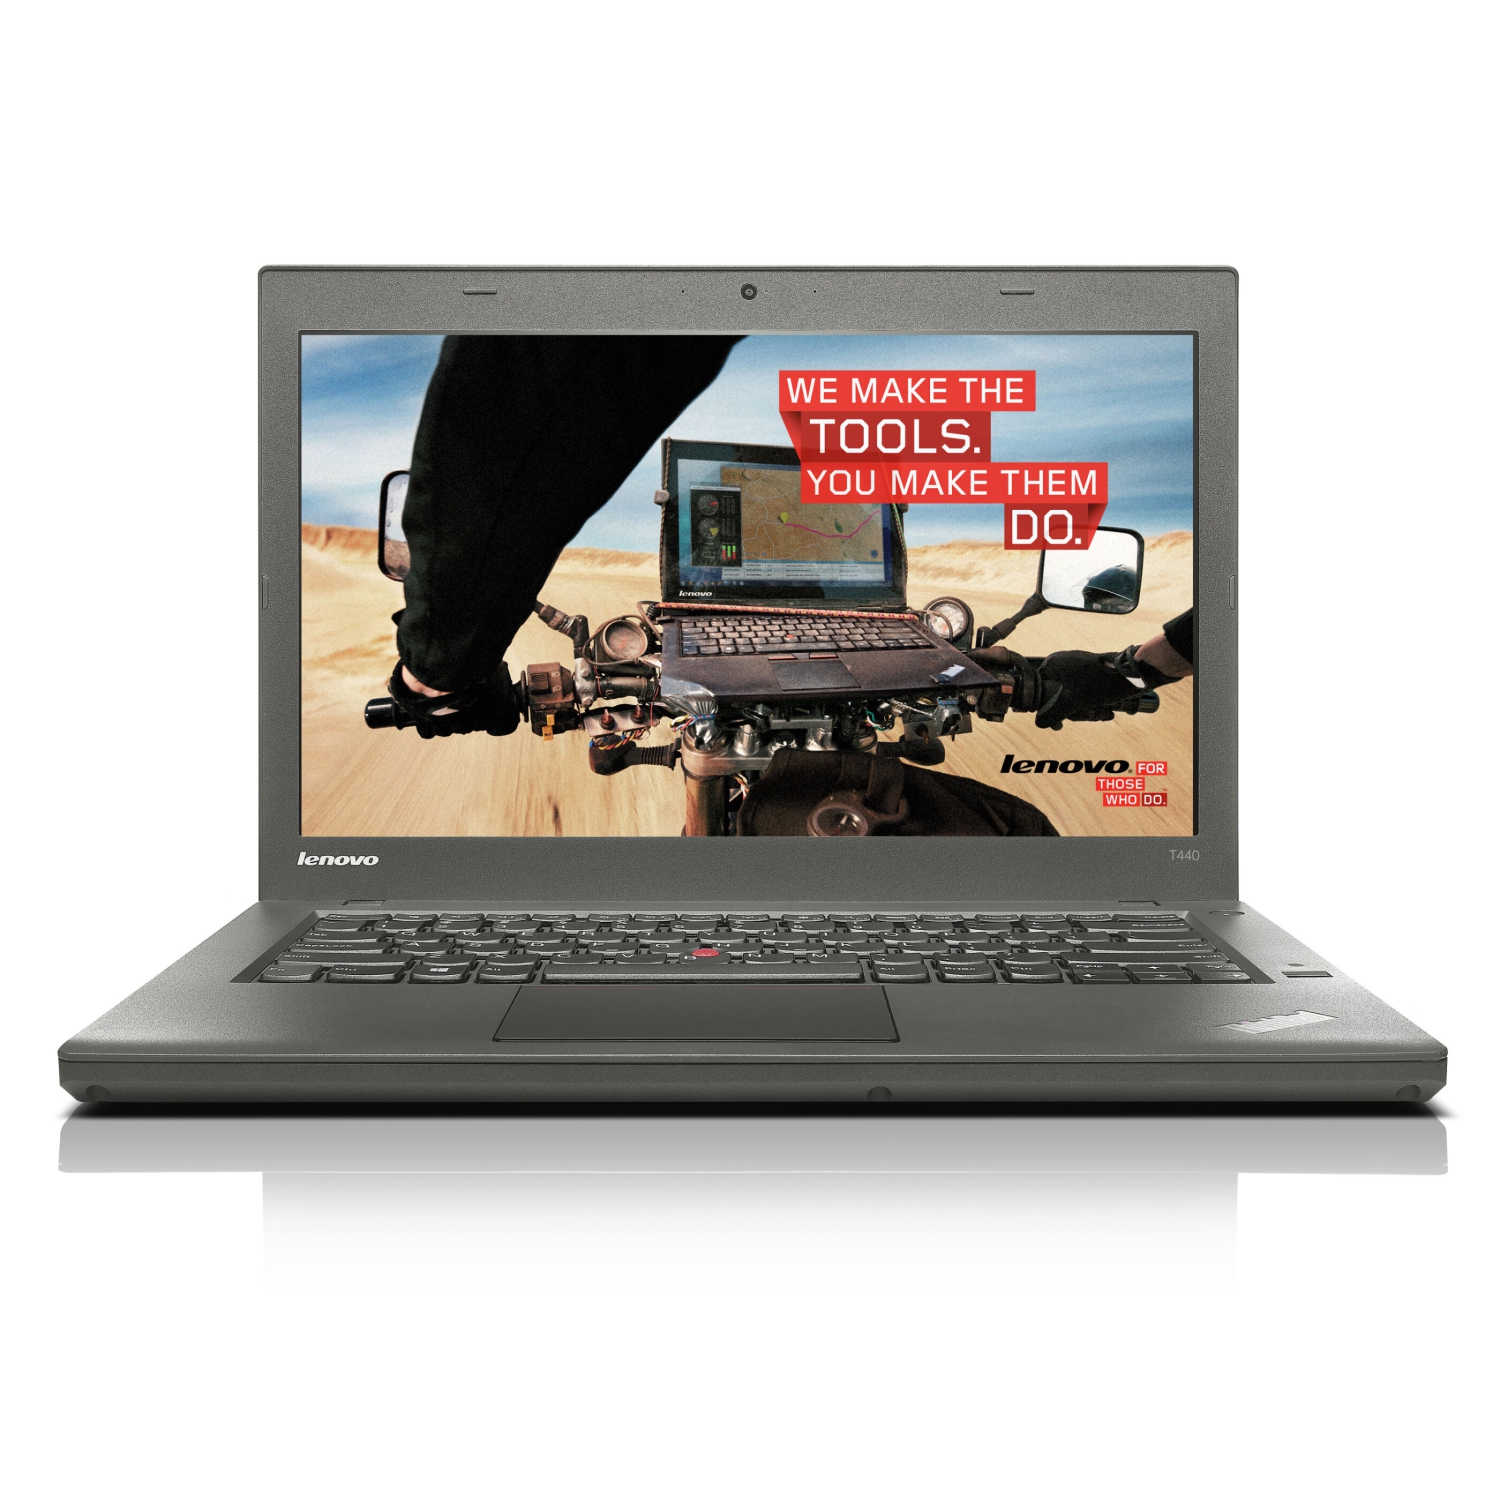 Refurbished (Good) - Lenovo Thinkpad T440 Laptop Intel Dual Core I5 4GB RAM 500GB HDD Windows 10 Home 14in Monitor